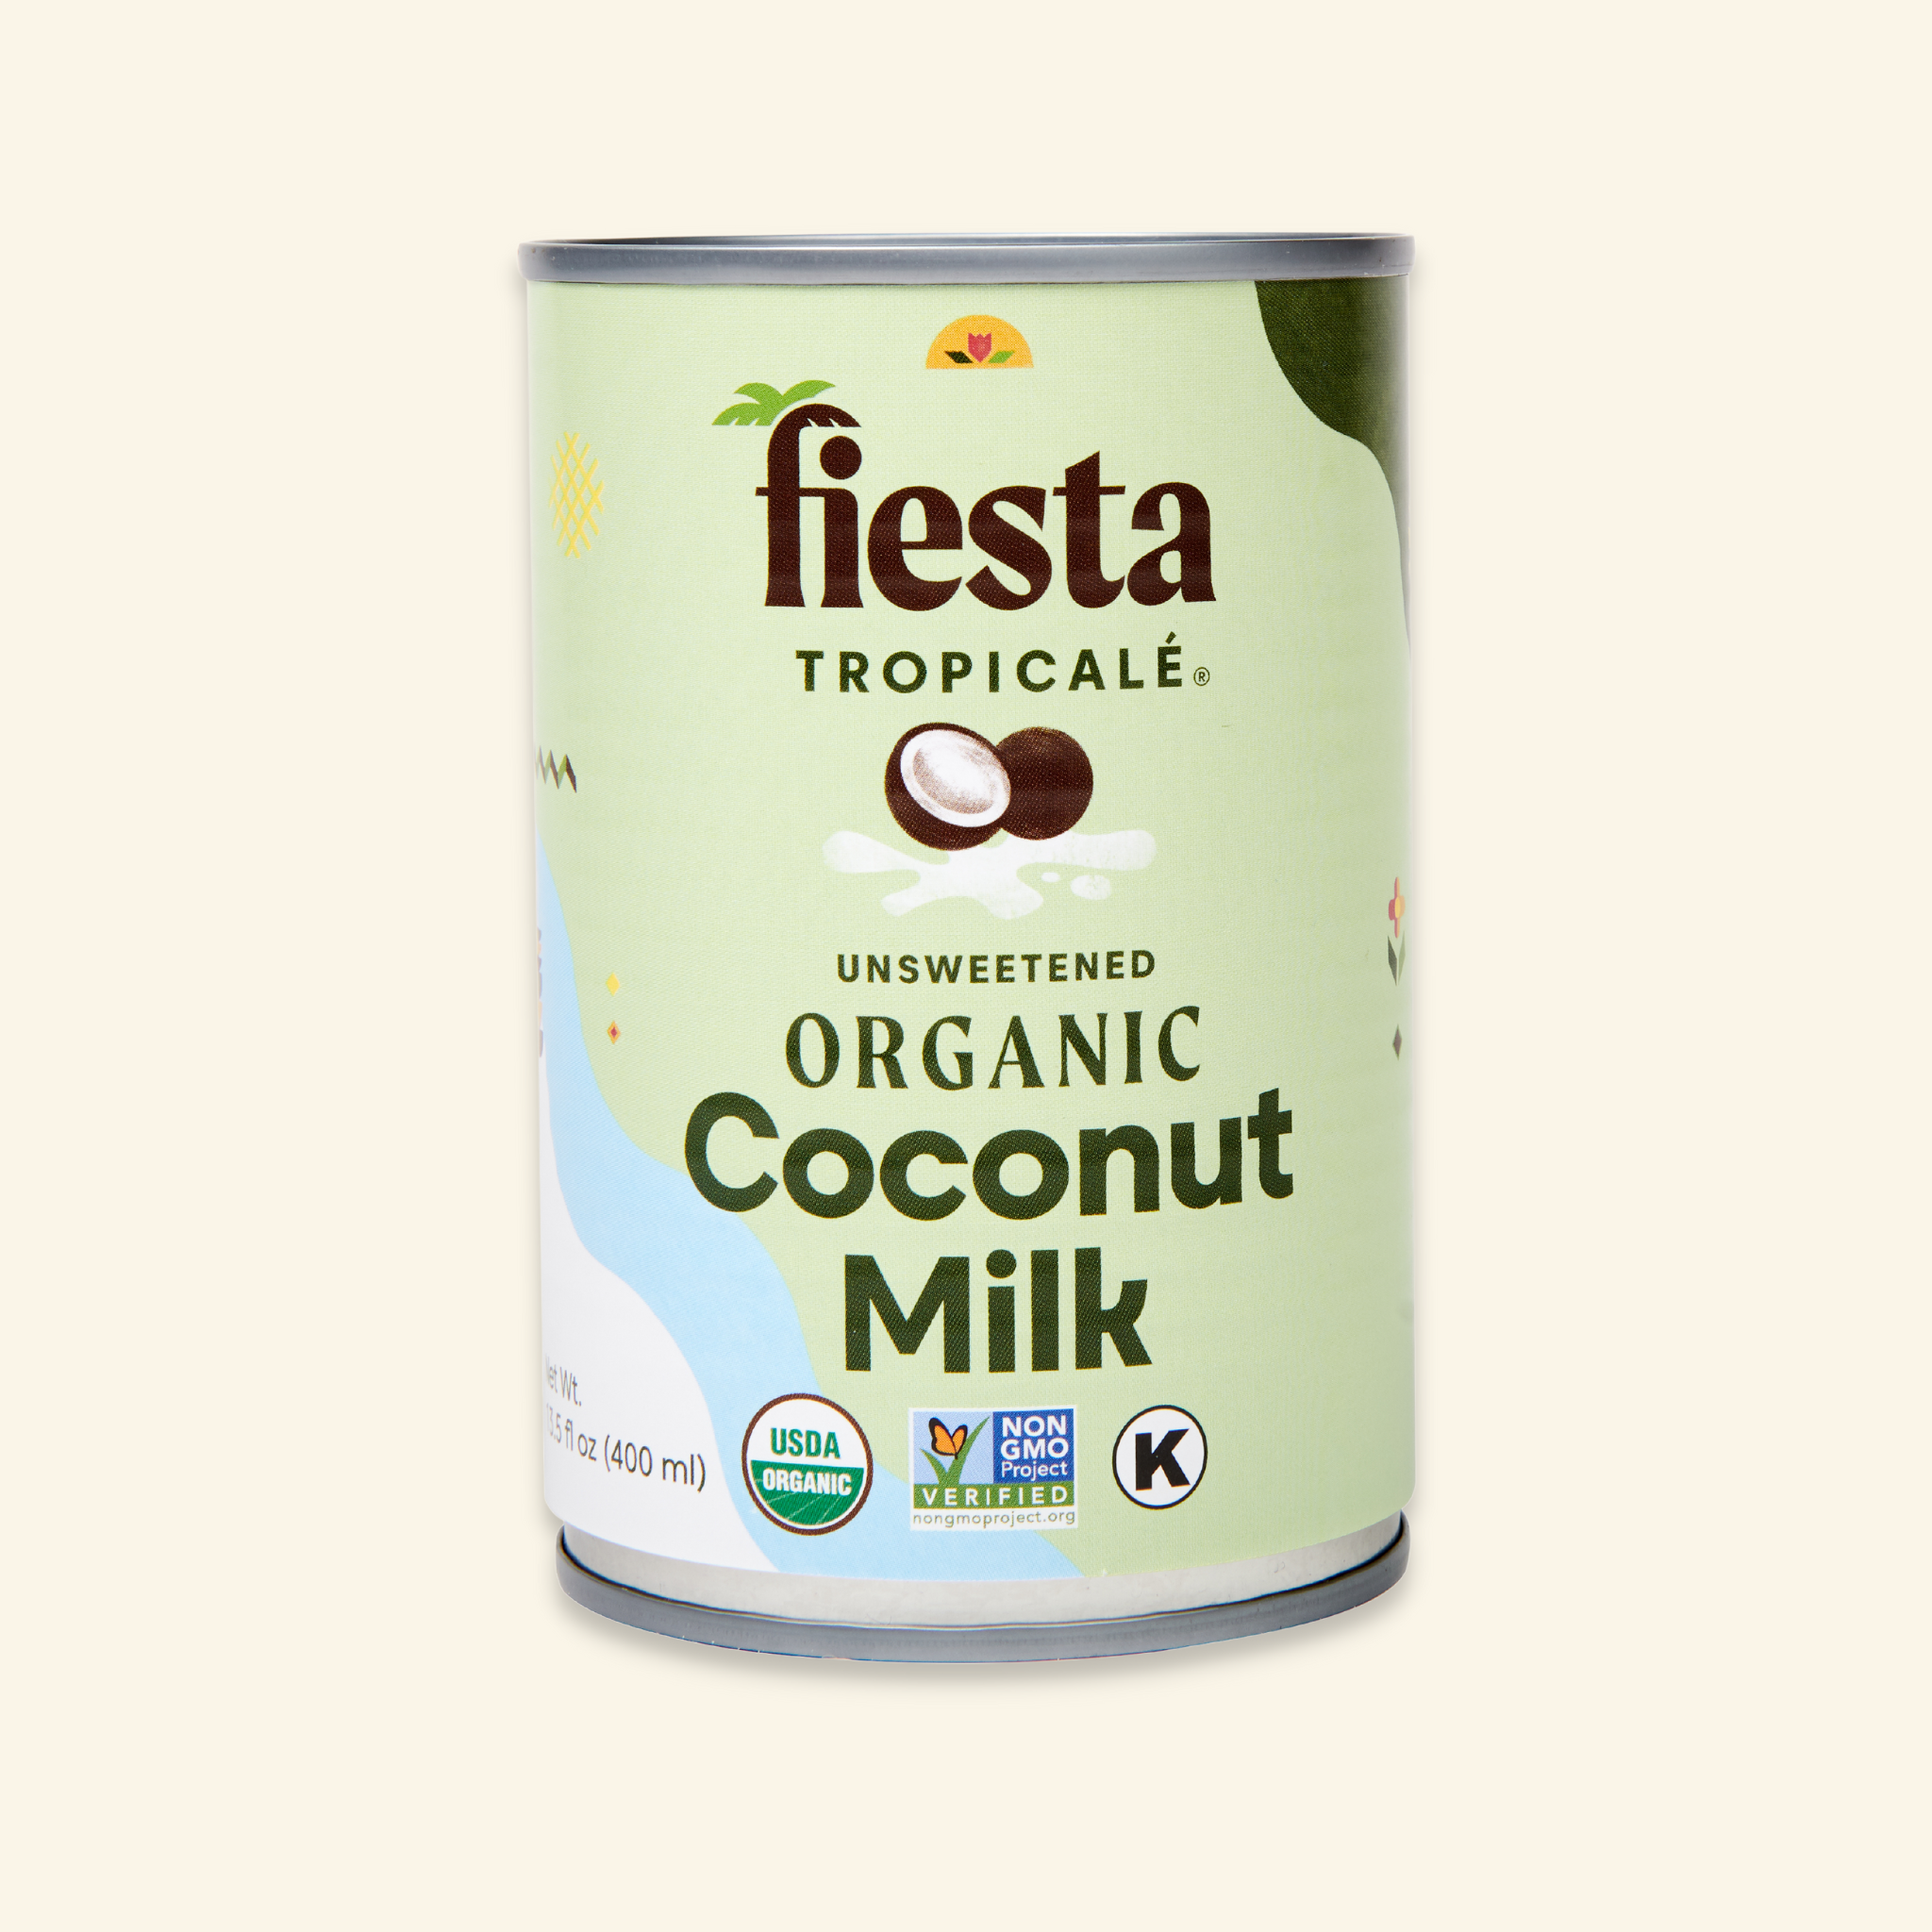 6 COCONUT MILK CANS ORGANIC 13.5 oz MAIKAI Brand Hawaiian Coconut Milk Gata  Rich